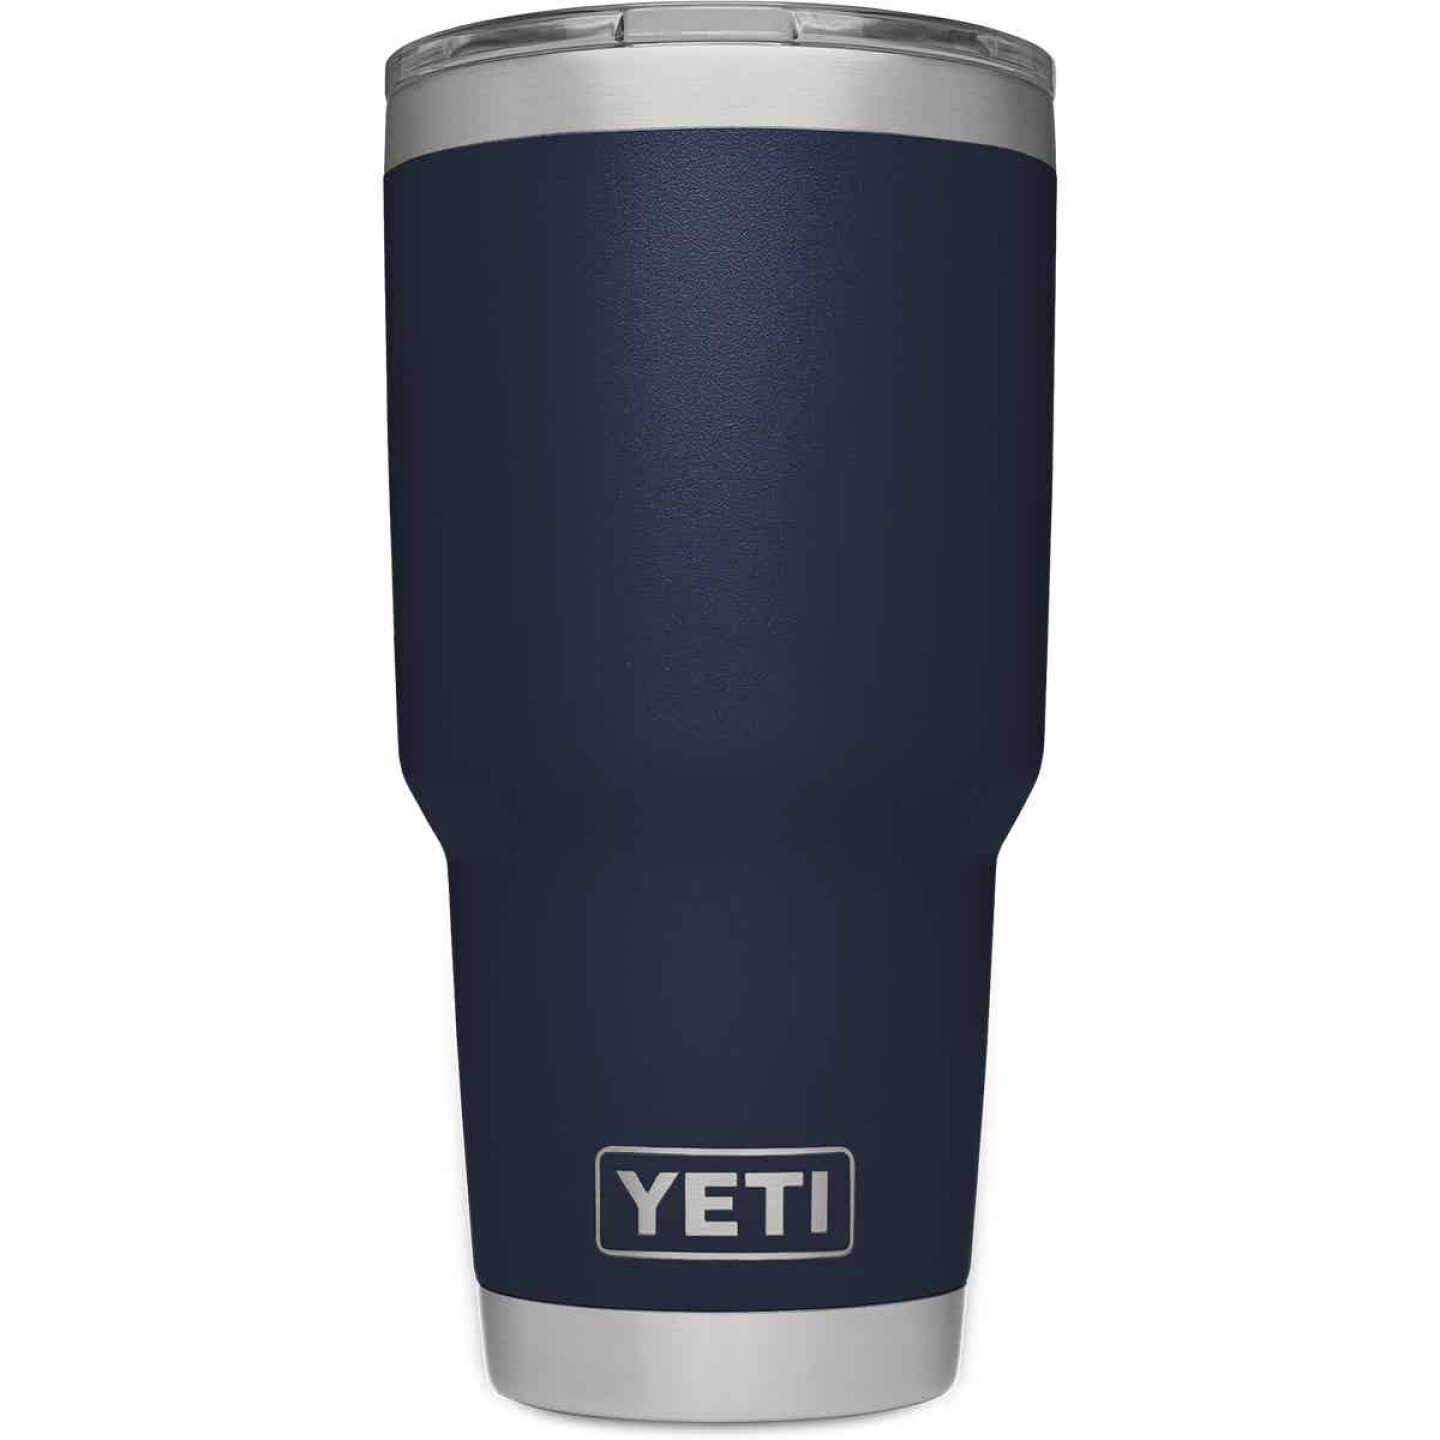 Yeti Rambler 30 oz Travel Mug Harvest Red - Foley Hardware